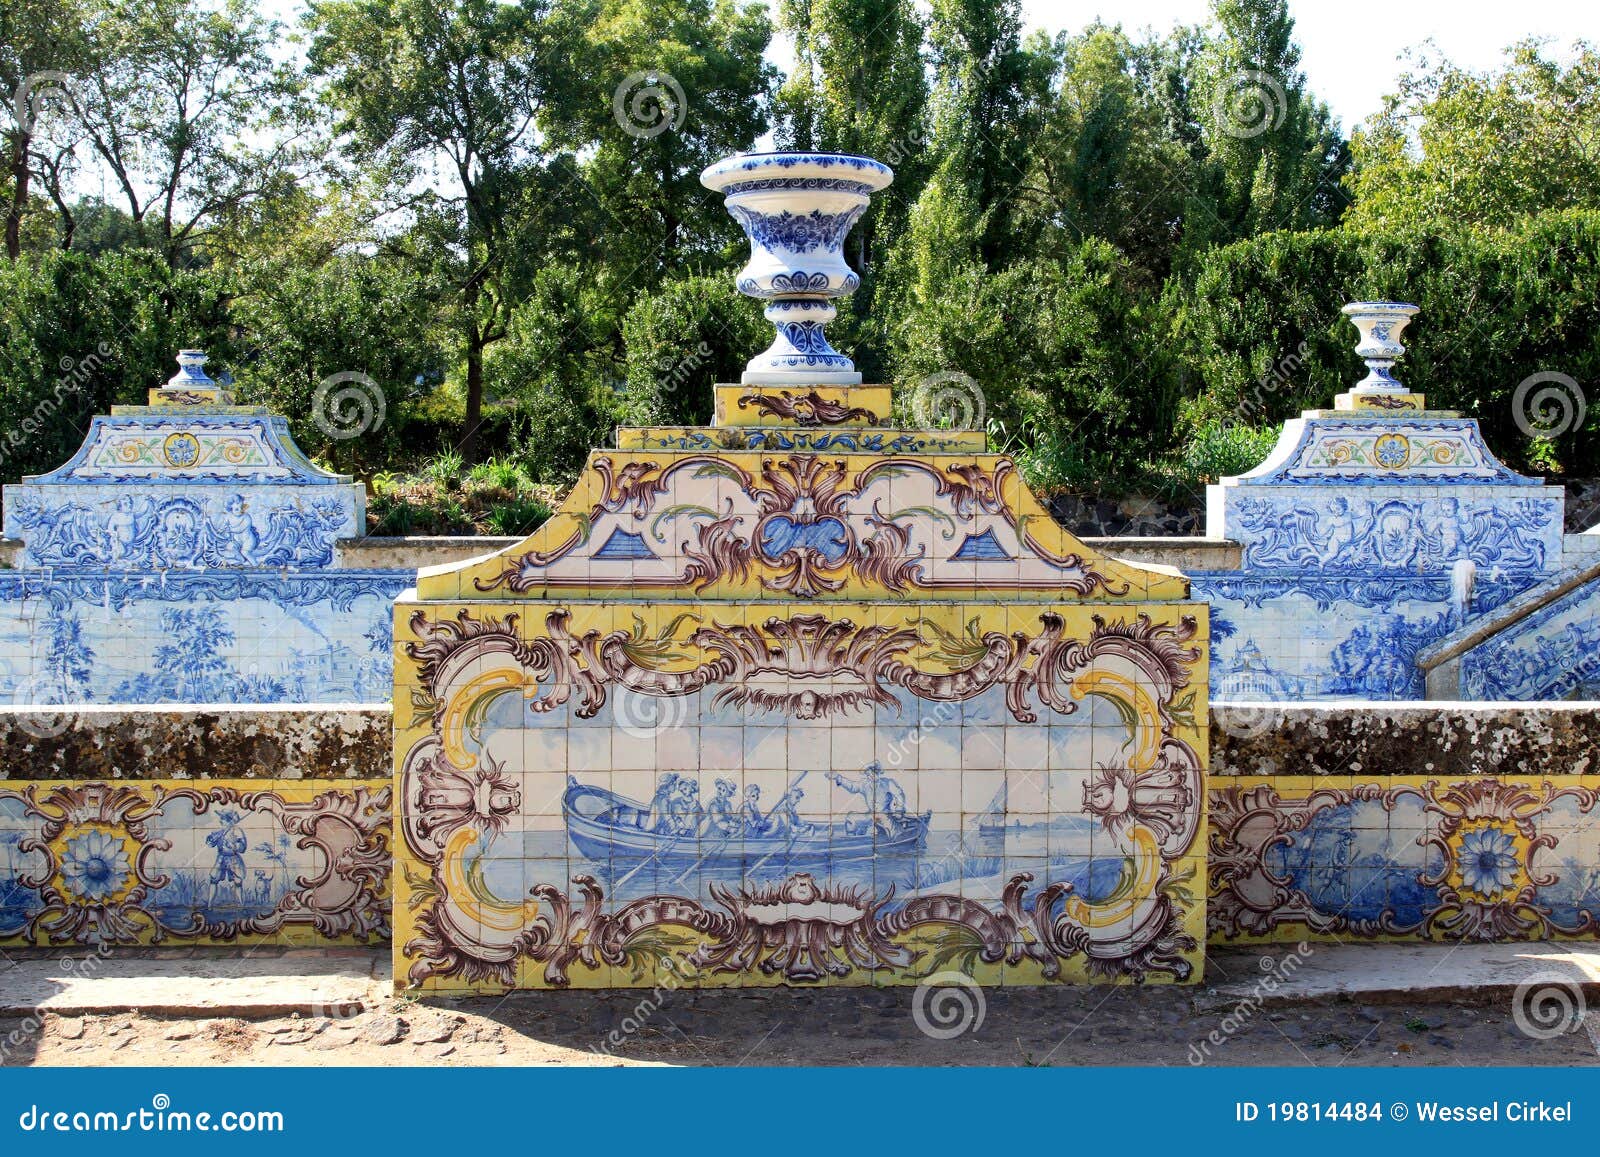 azulejos of canal in garden queluz national palace